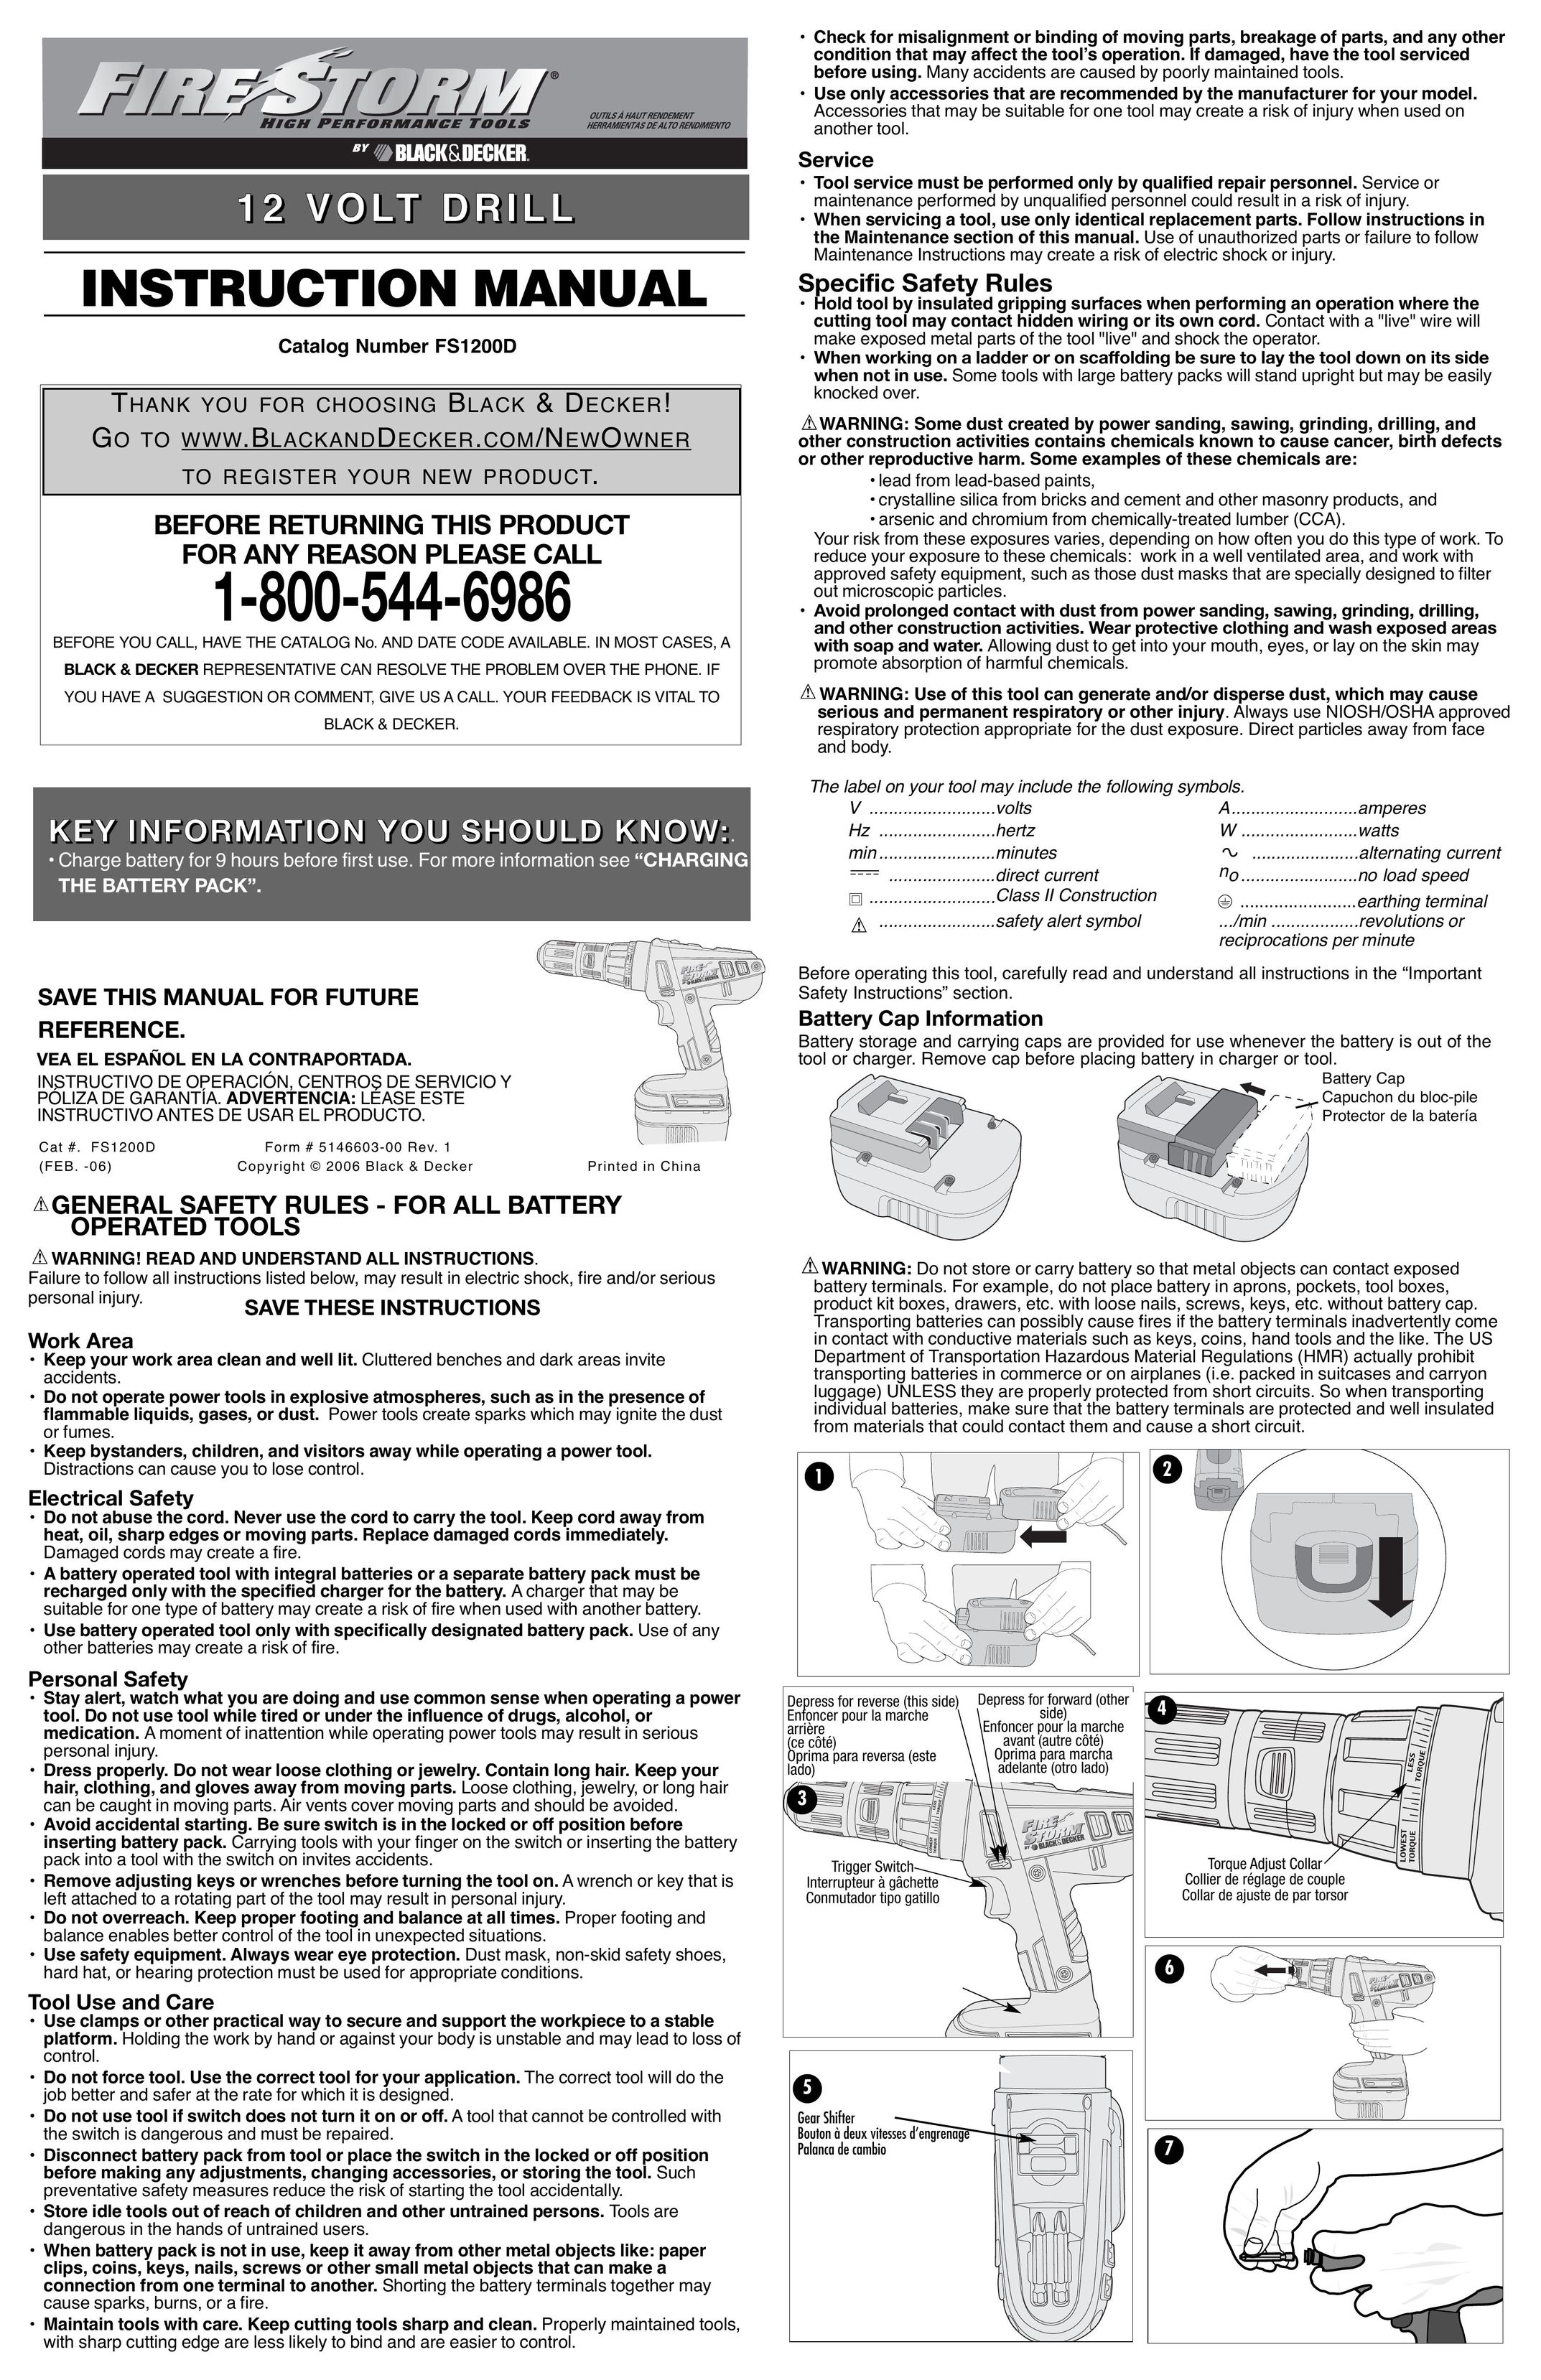 Black & Decker 5146603-00 Drill User Manual